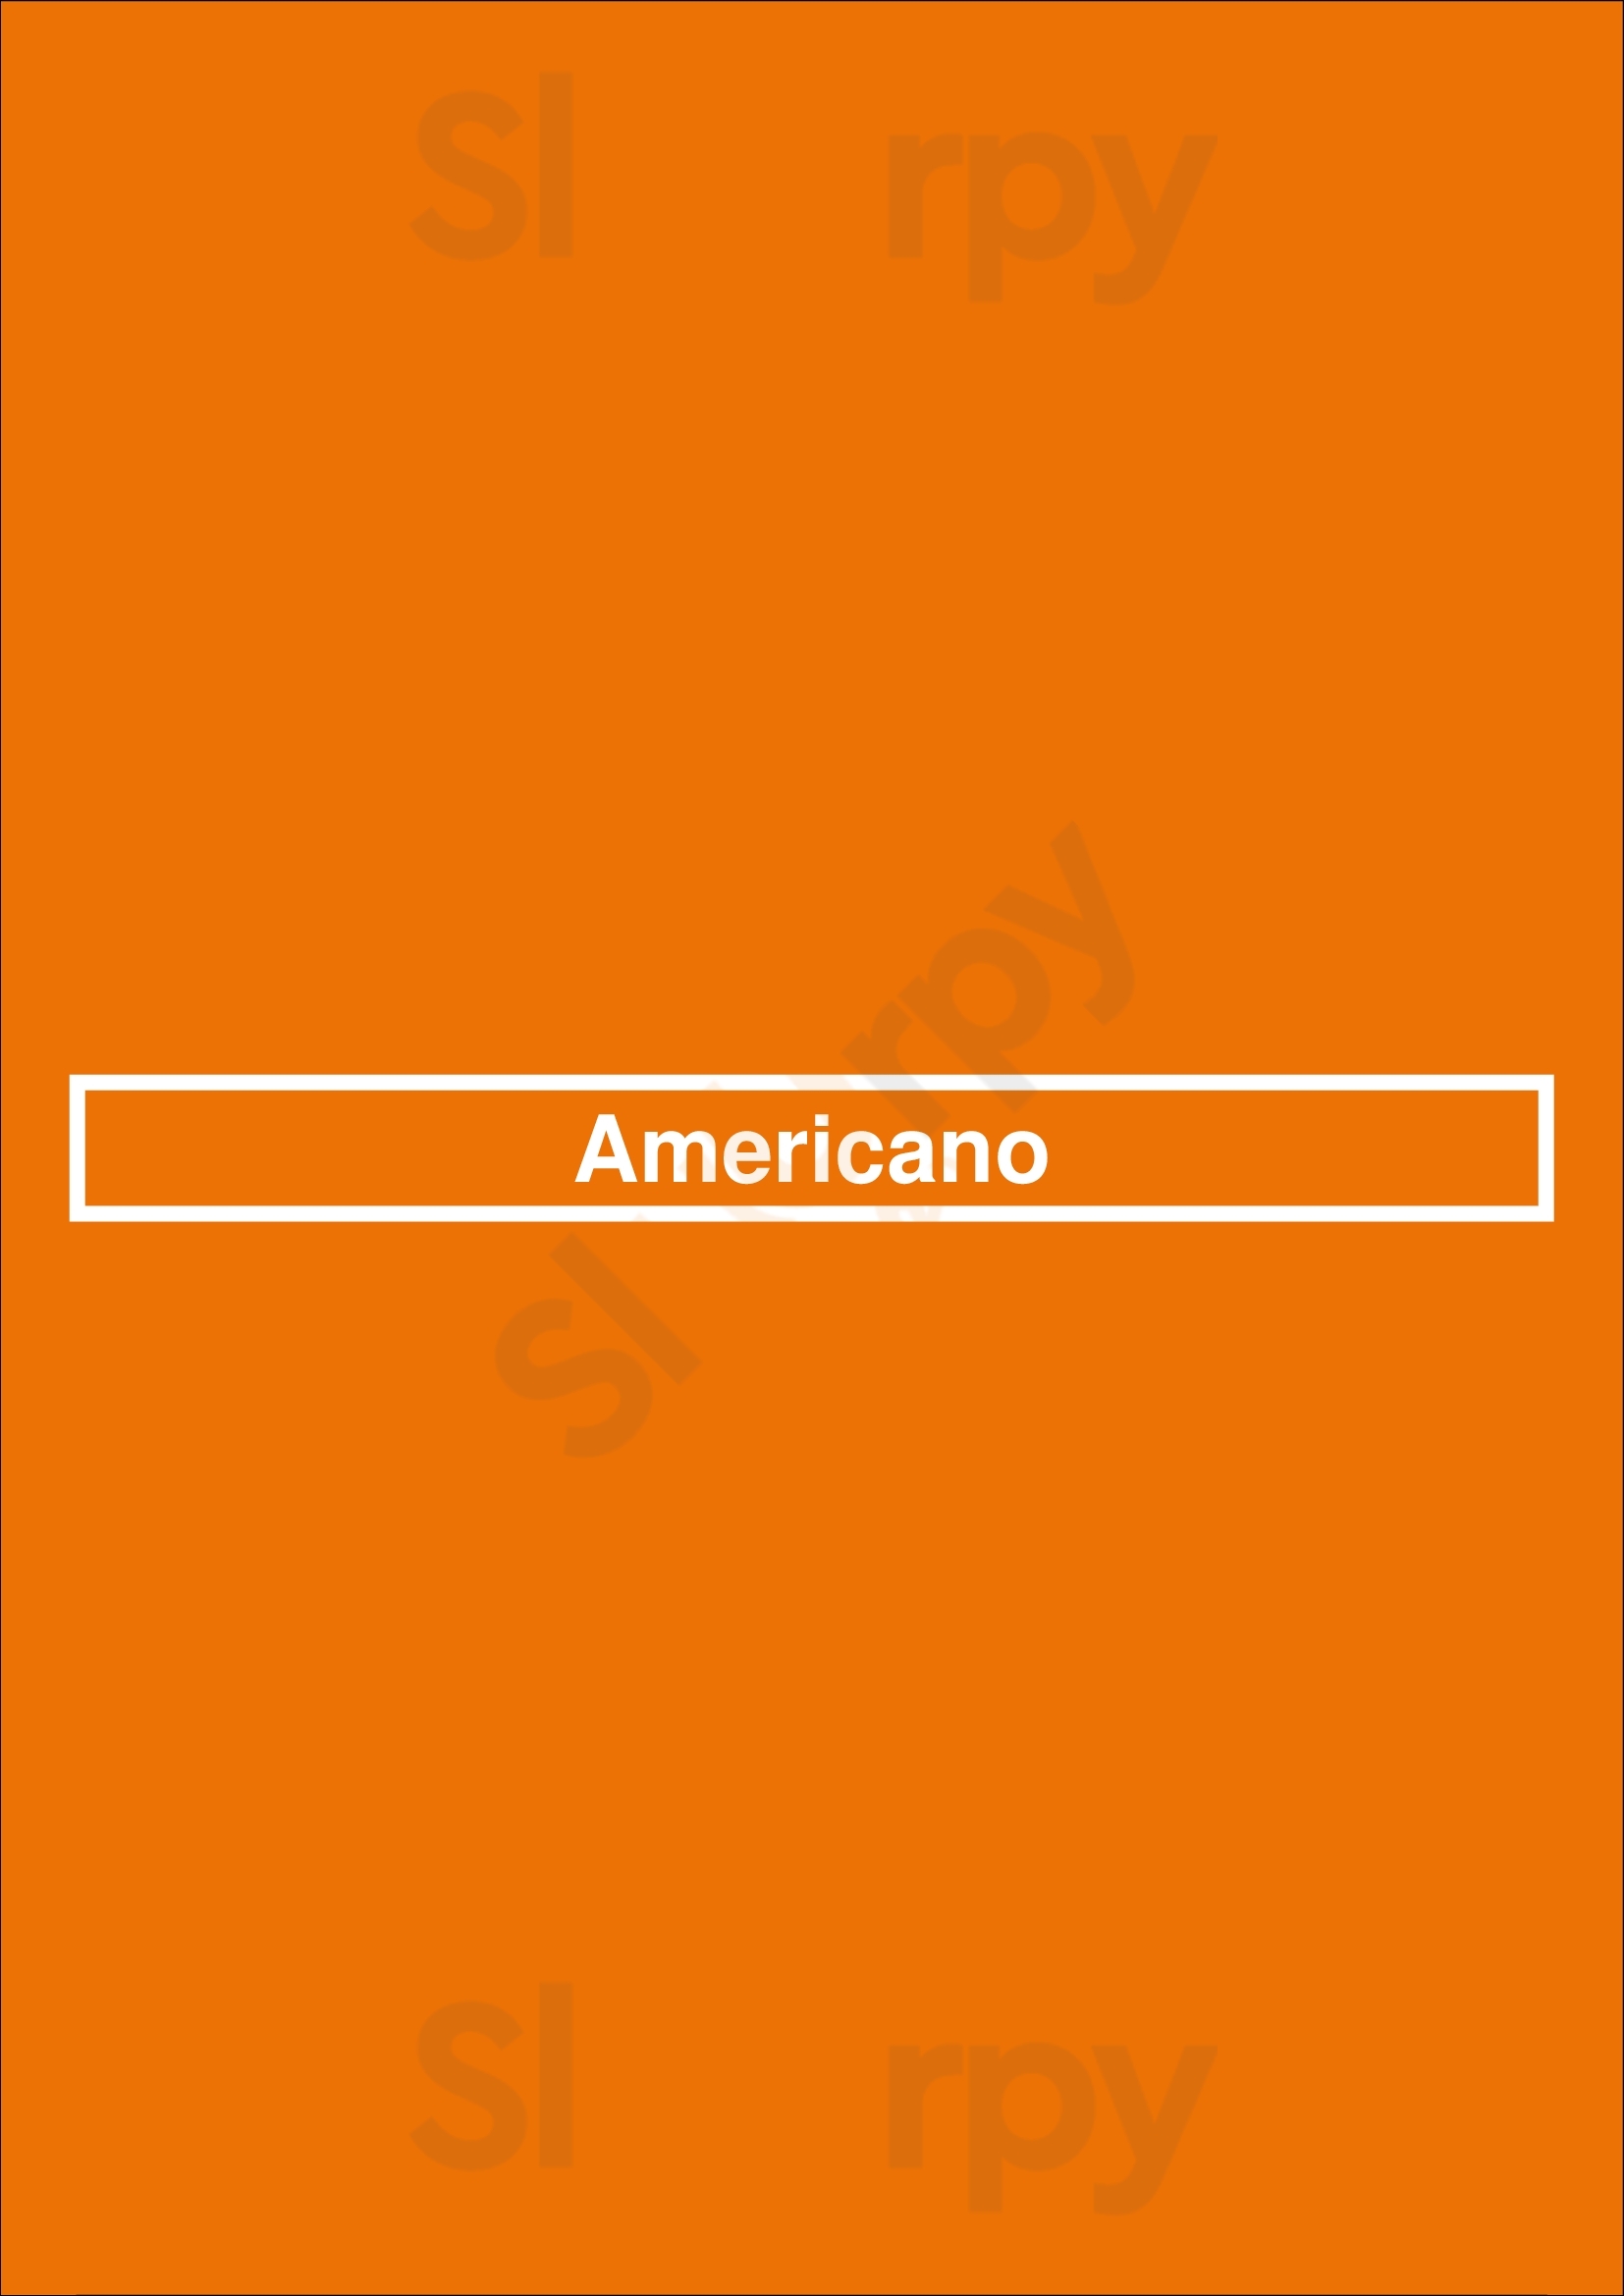 Americano Hounslow Menu - 1